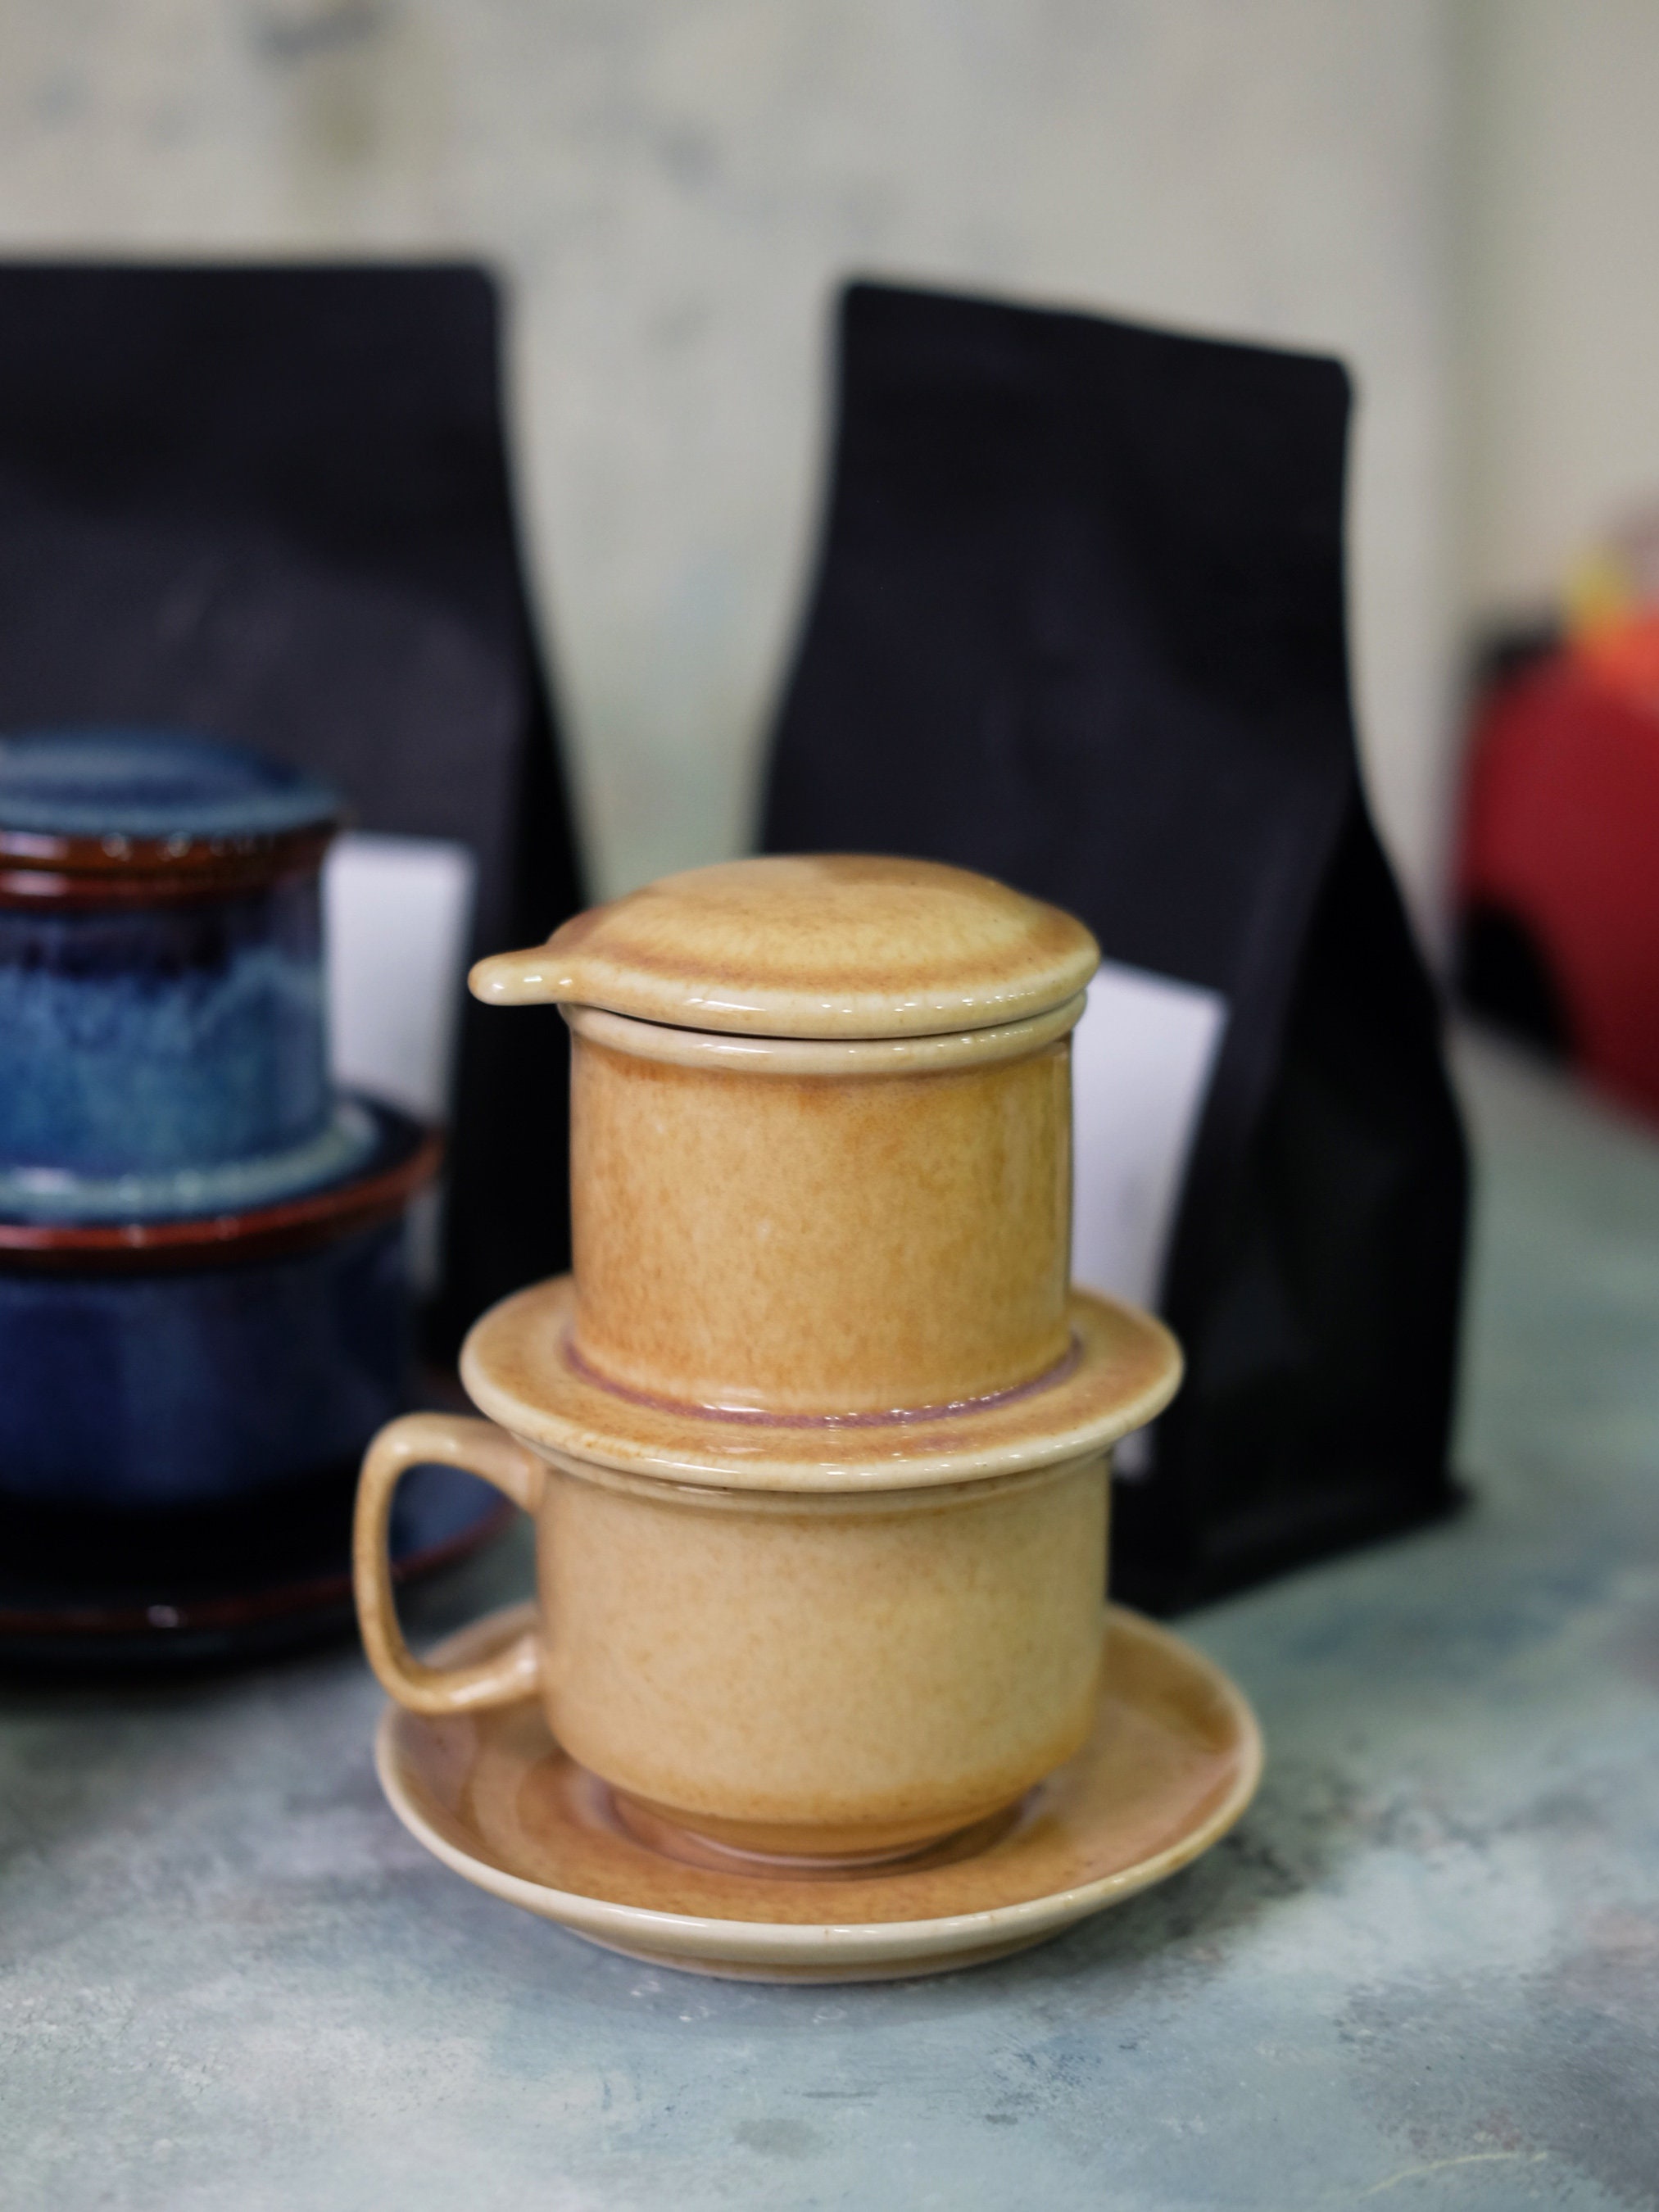 Hasami Ware New Ceramic Coffee Filter & Dripper | Paper Filterless | Black  | Gift Present EthicalHouse (Minimalist Set)